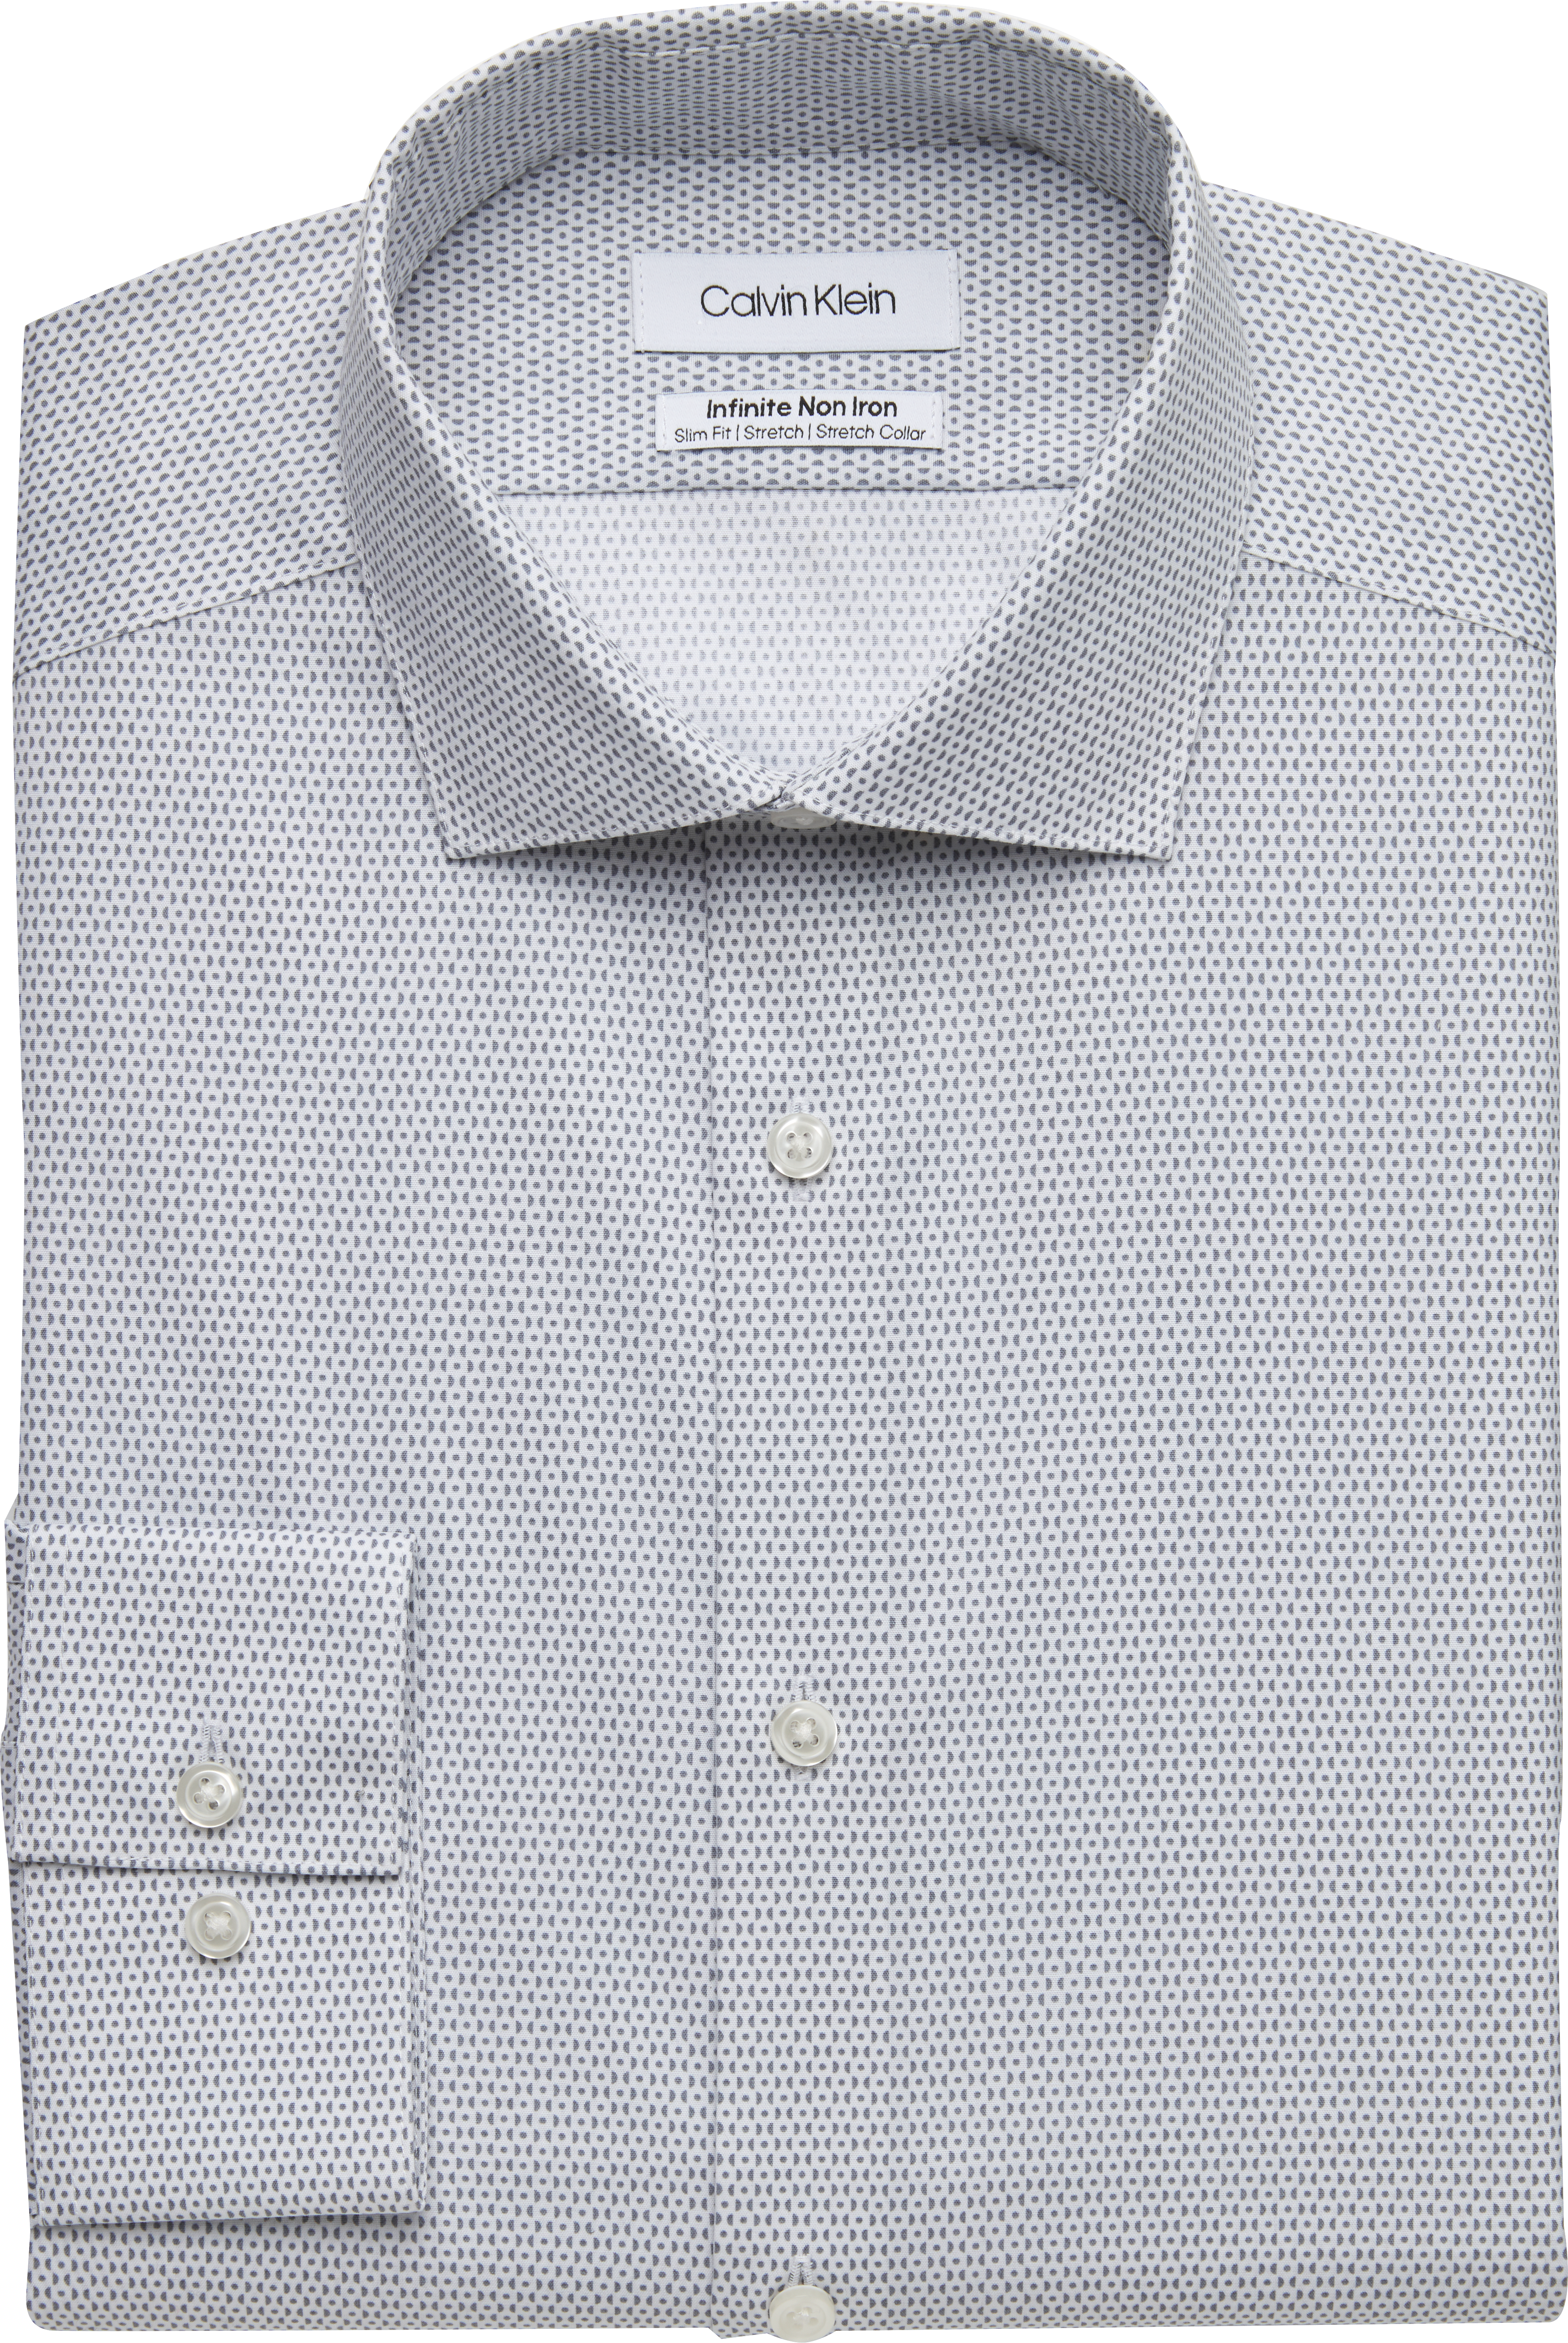 Calvin Klein Infinite Non-Iron Gray Print Slim Fit Dress Shirt - Men's Sale  | Men's Wearhouse